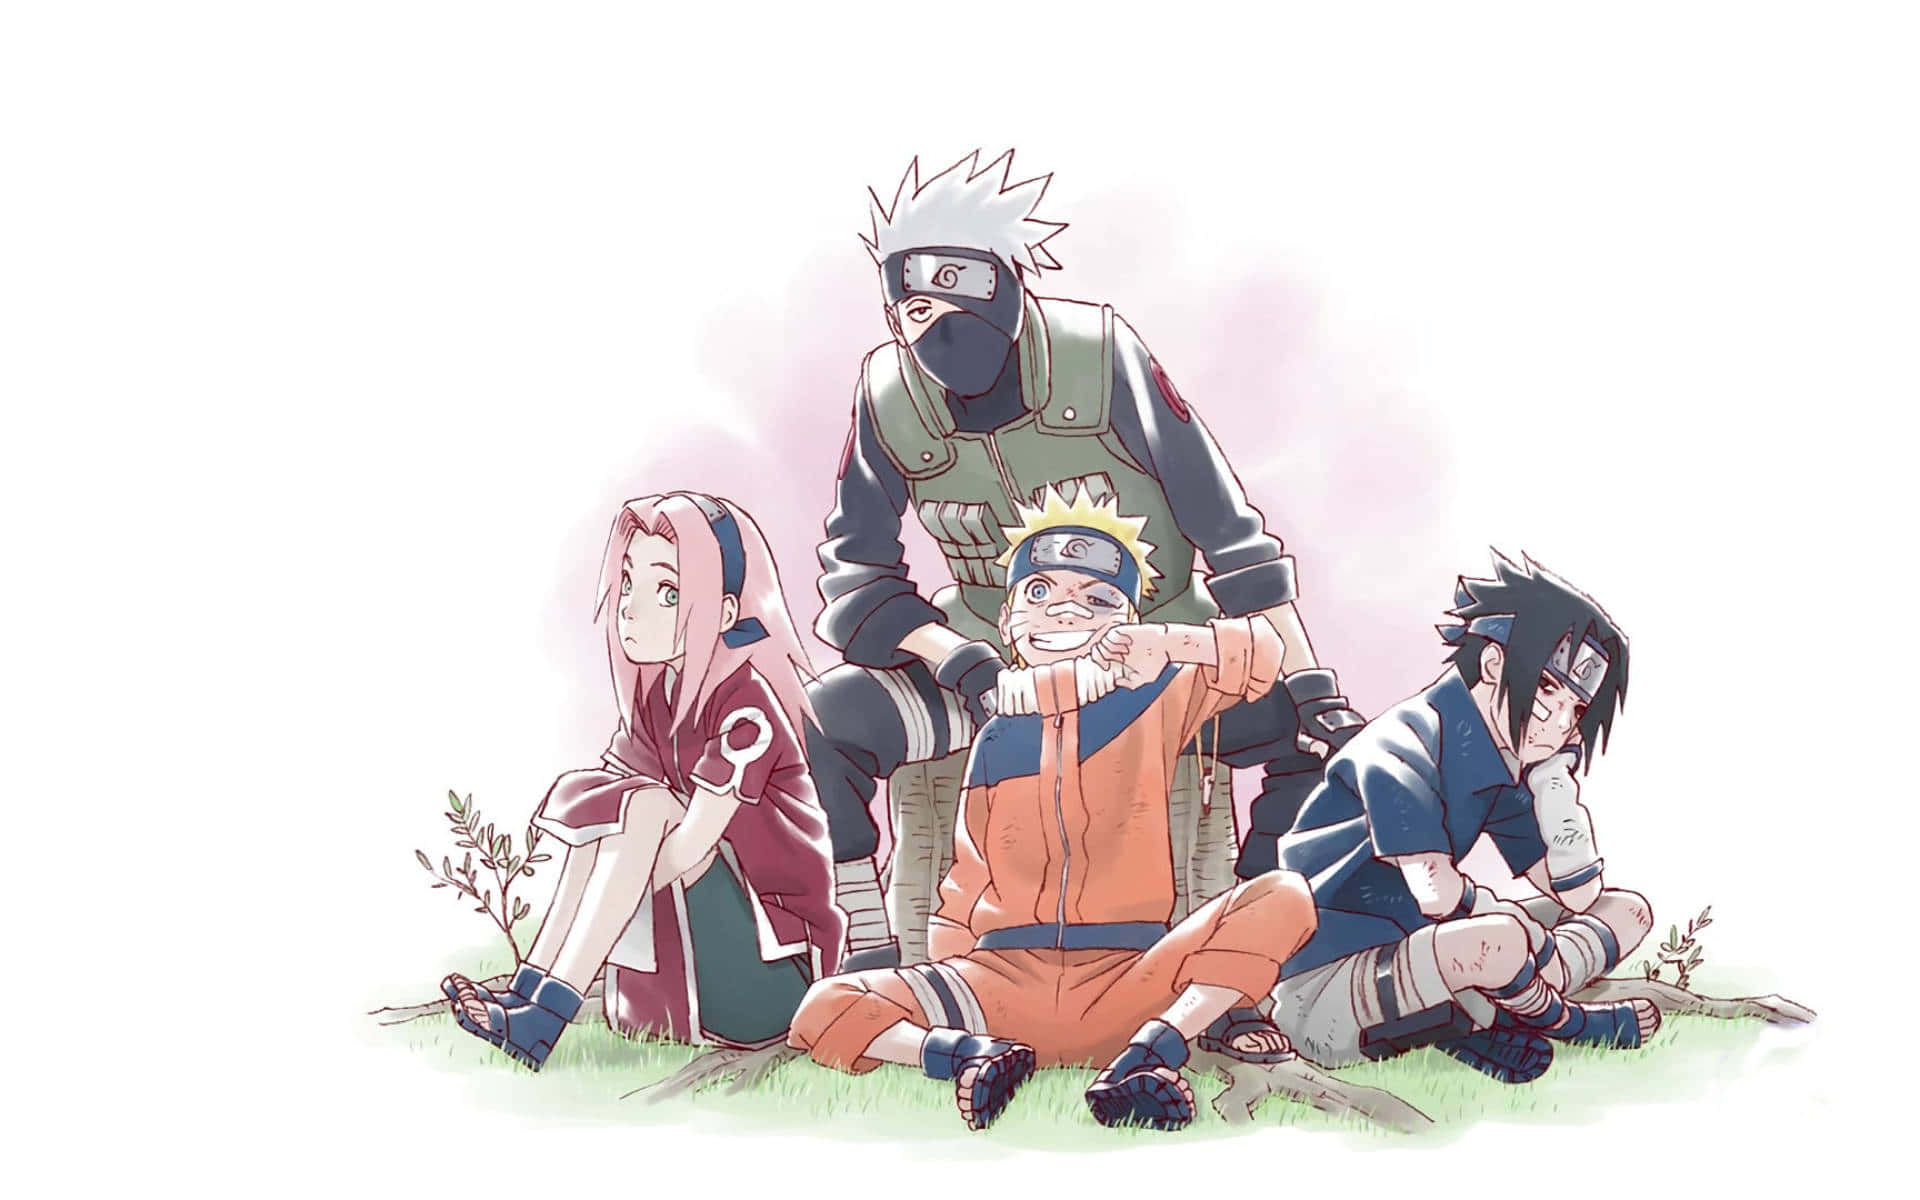 Fra venstre til højre blev Naruto Uzamaki, Sakura Haruno, Kakashi Hatake og Sasuke Uchiha genforenet som Team 7. Wallpaper